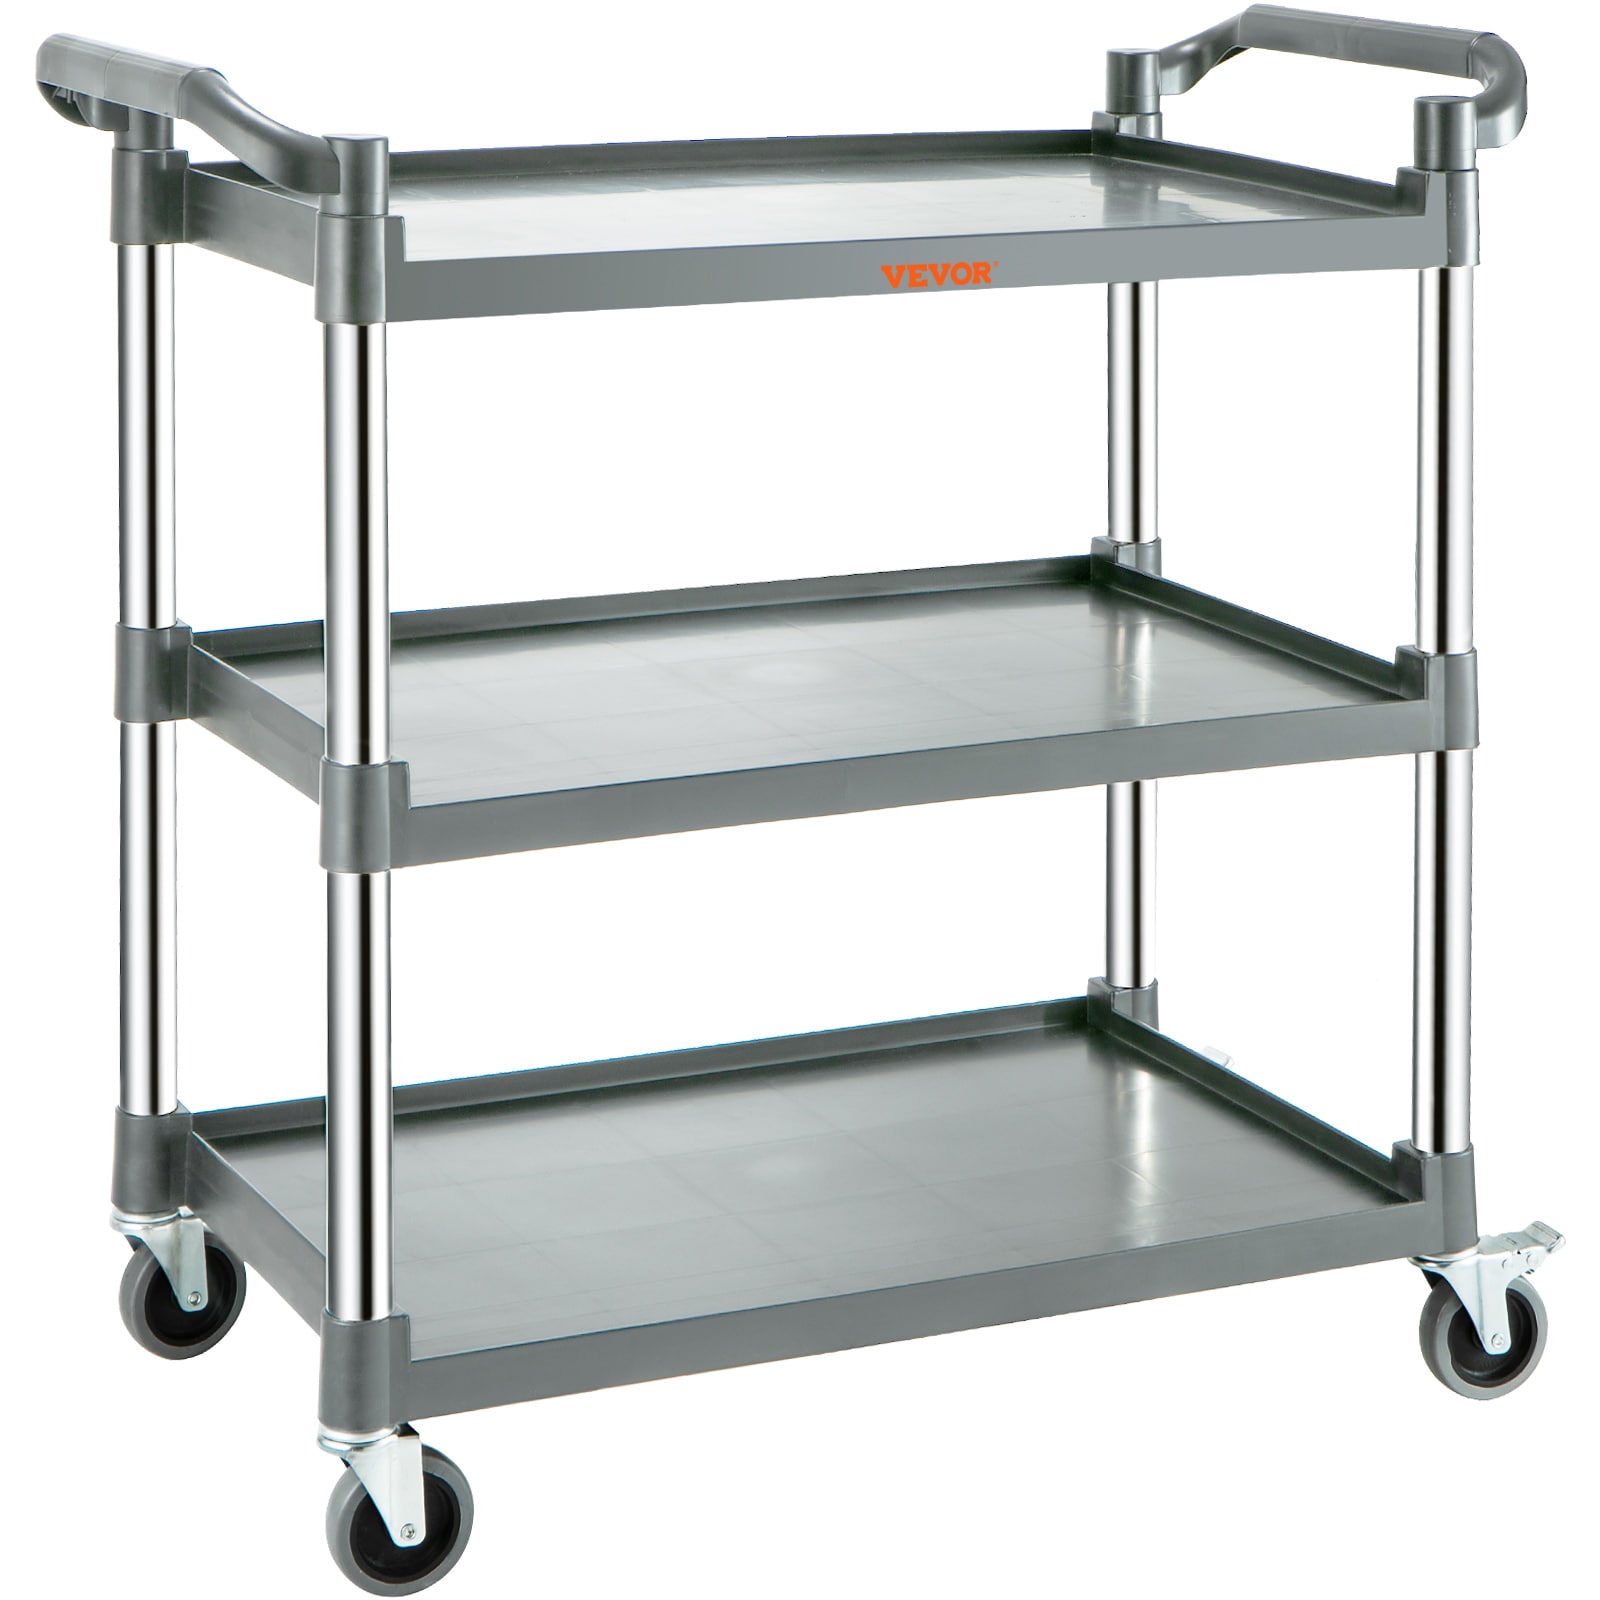 Kobalt 32.6-in-Drawer Shelf Utility Cart in the Utility Carts